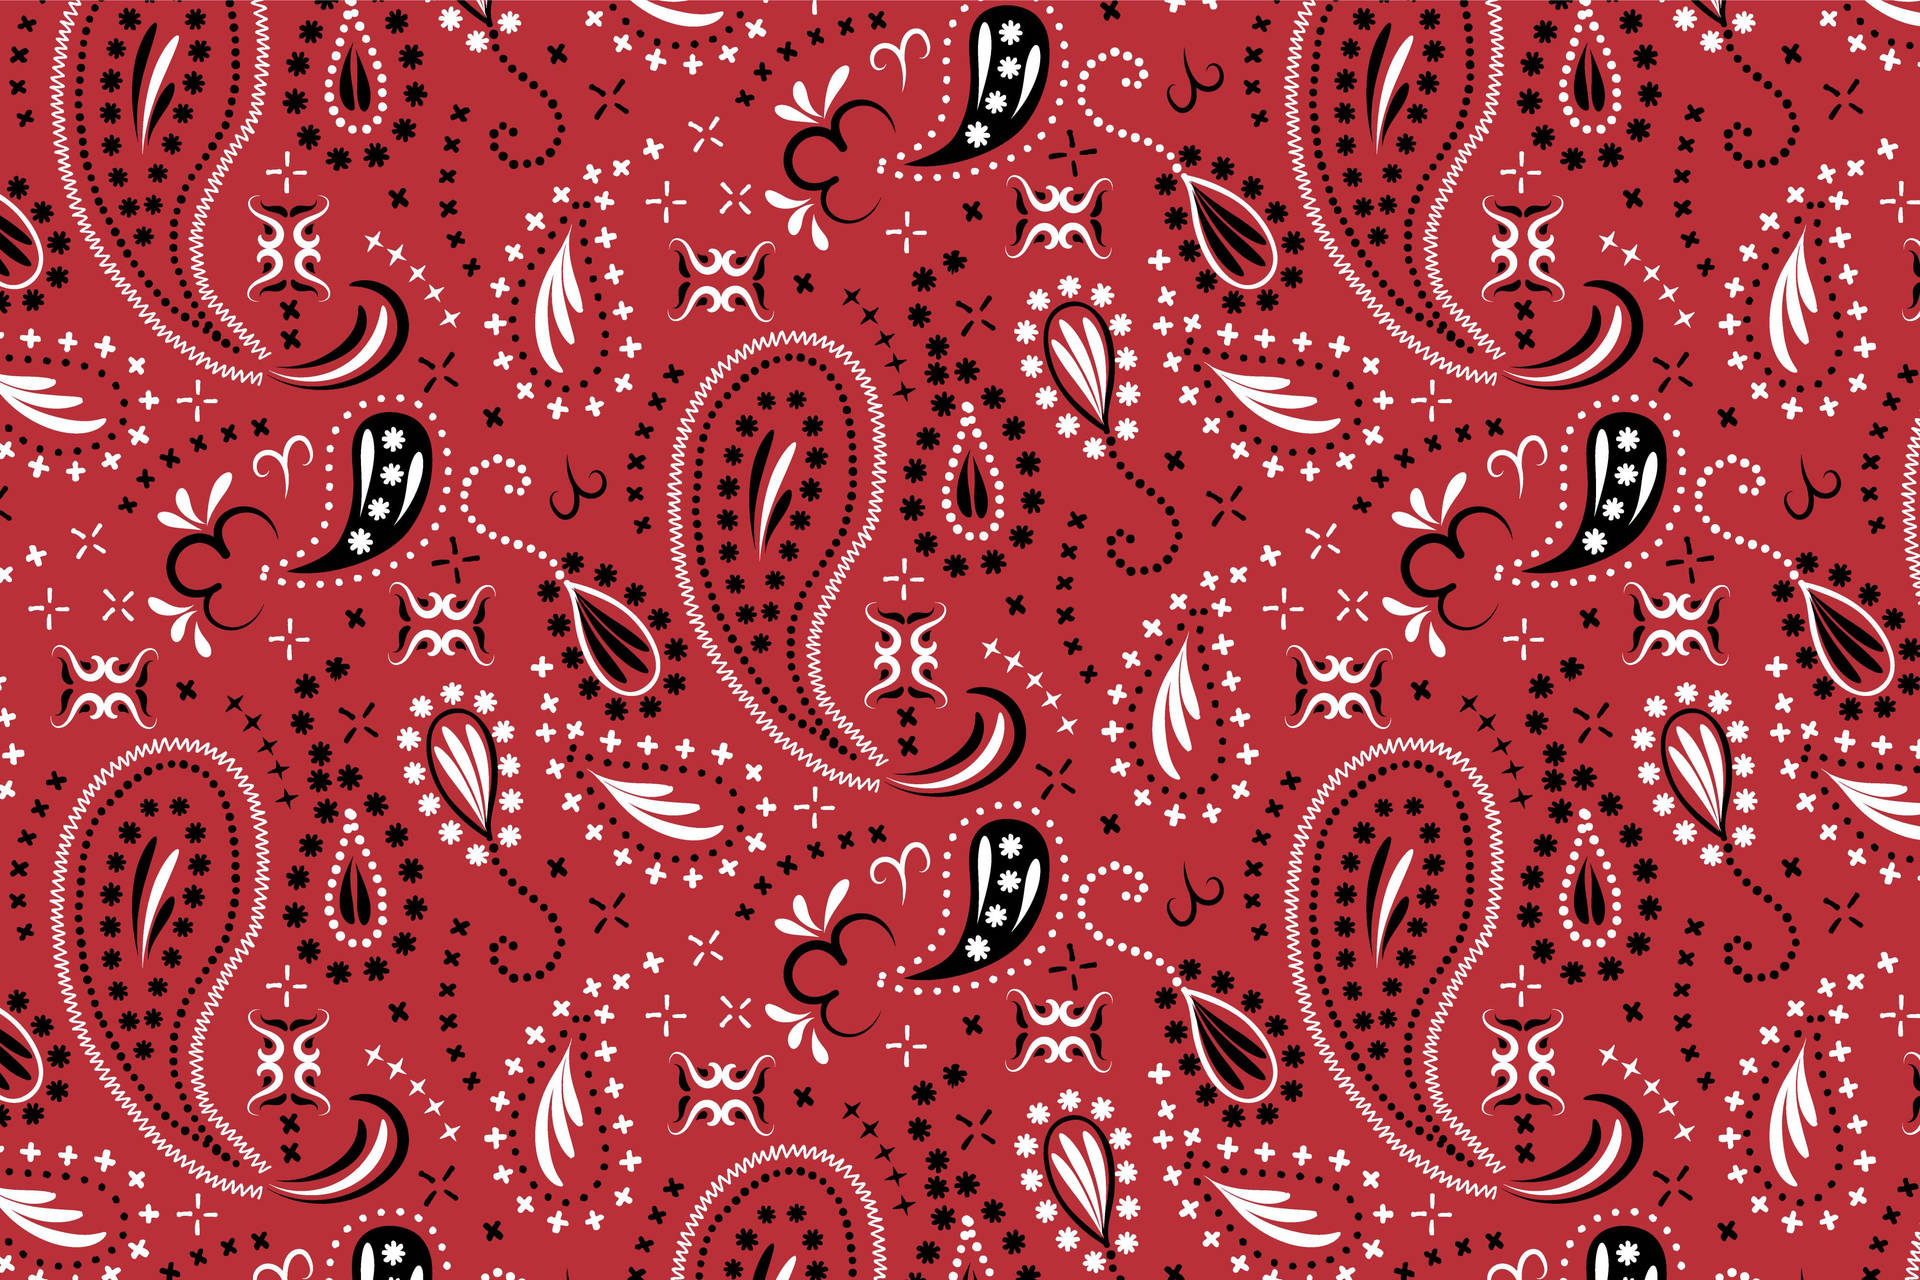 100+] Red Bandana Wallpapers